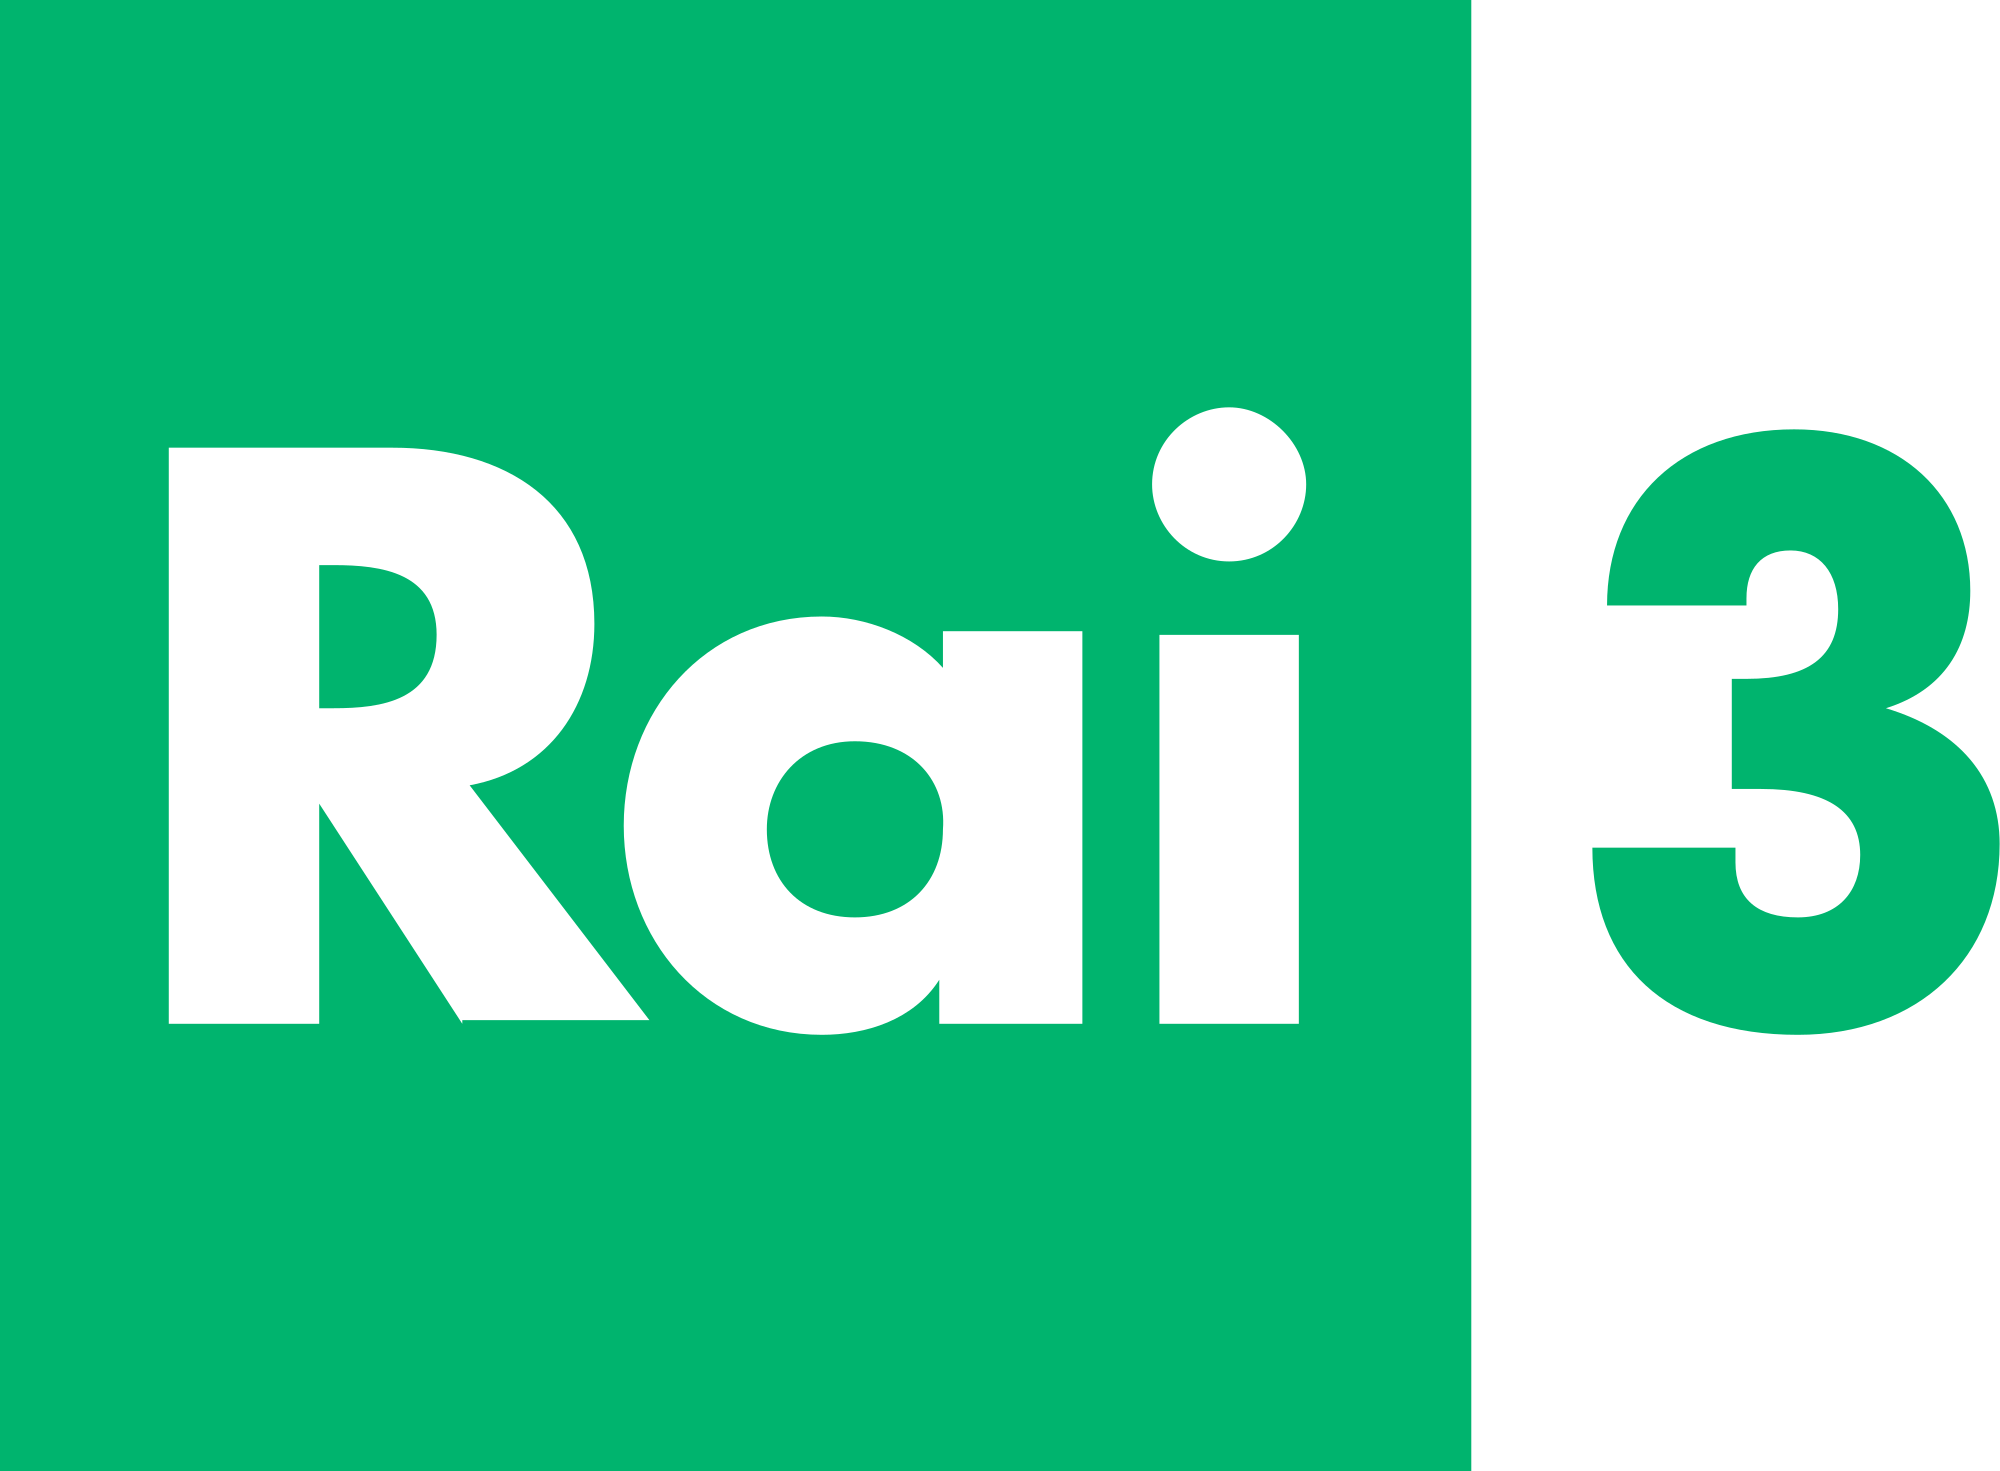 Rai 3 - network